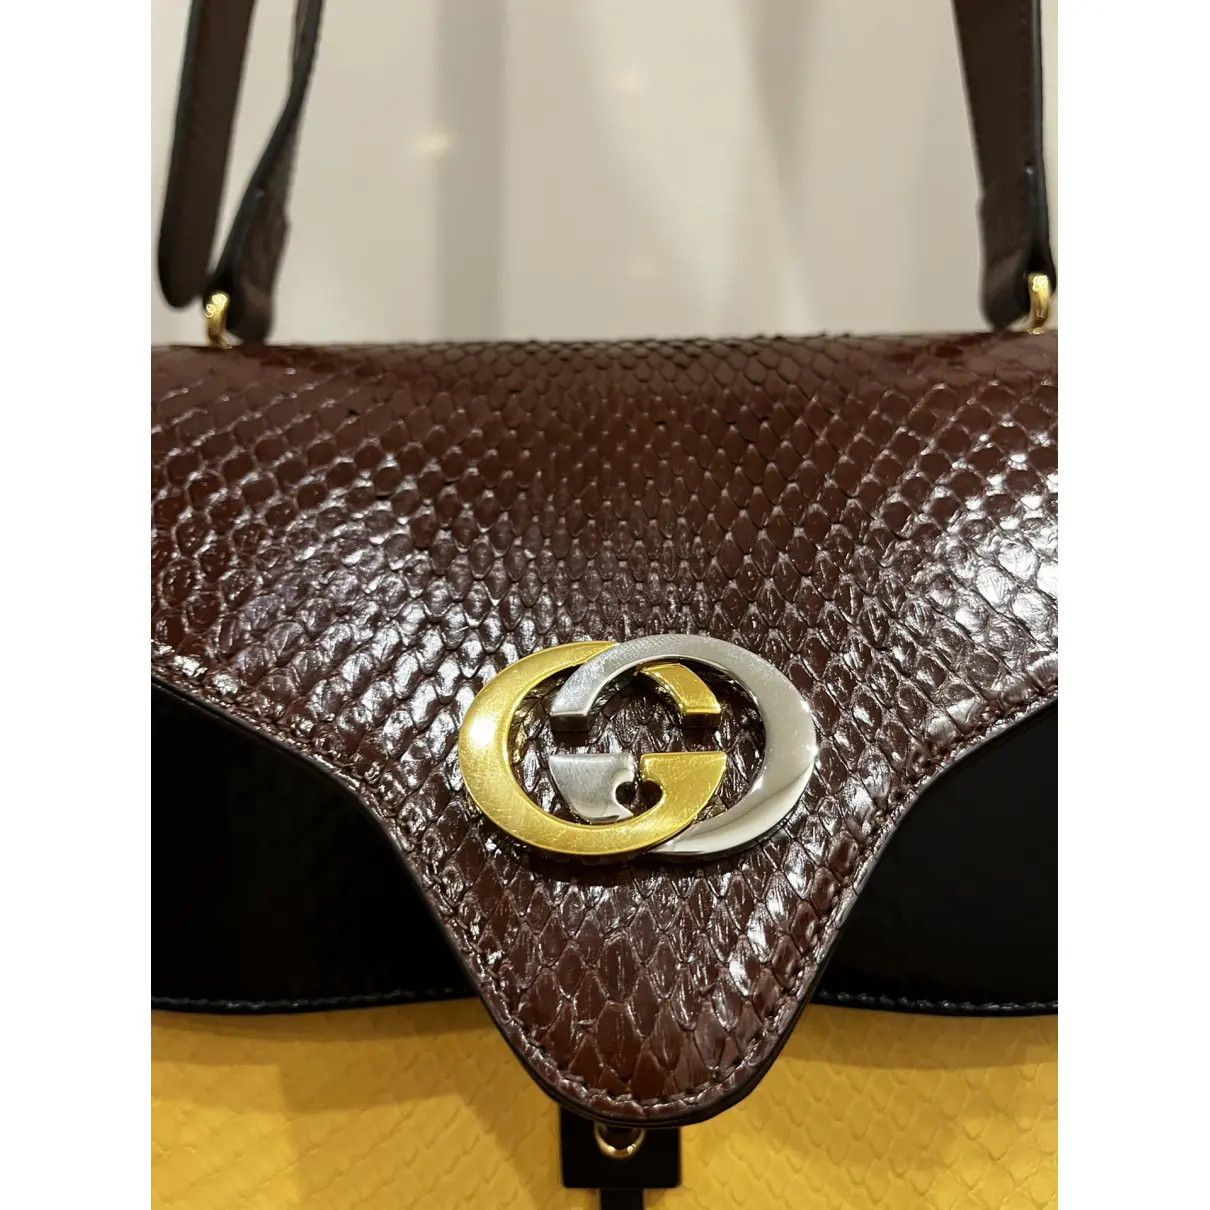 Zumi python handbag Gucci